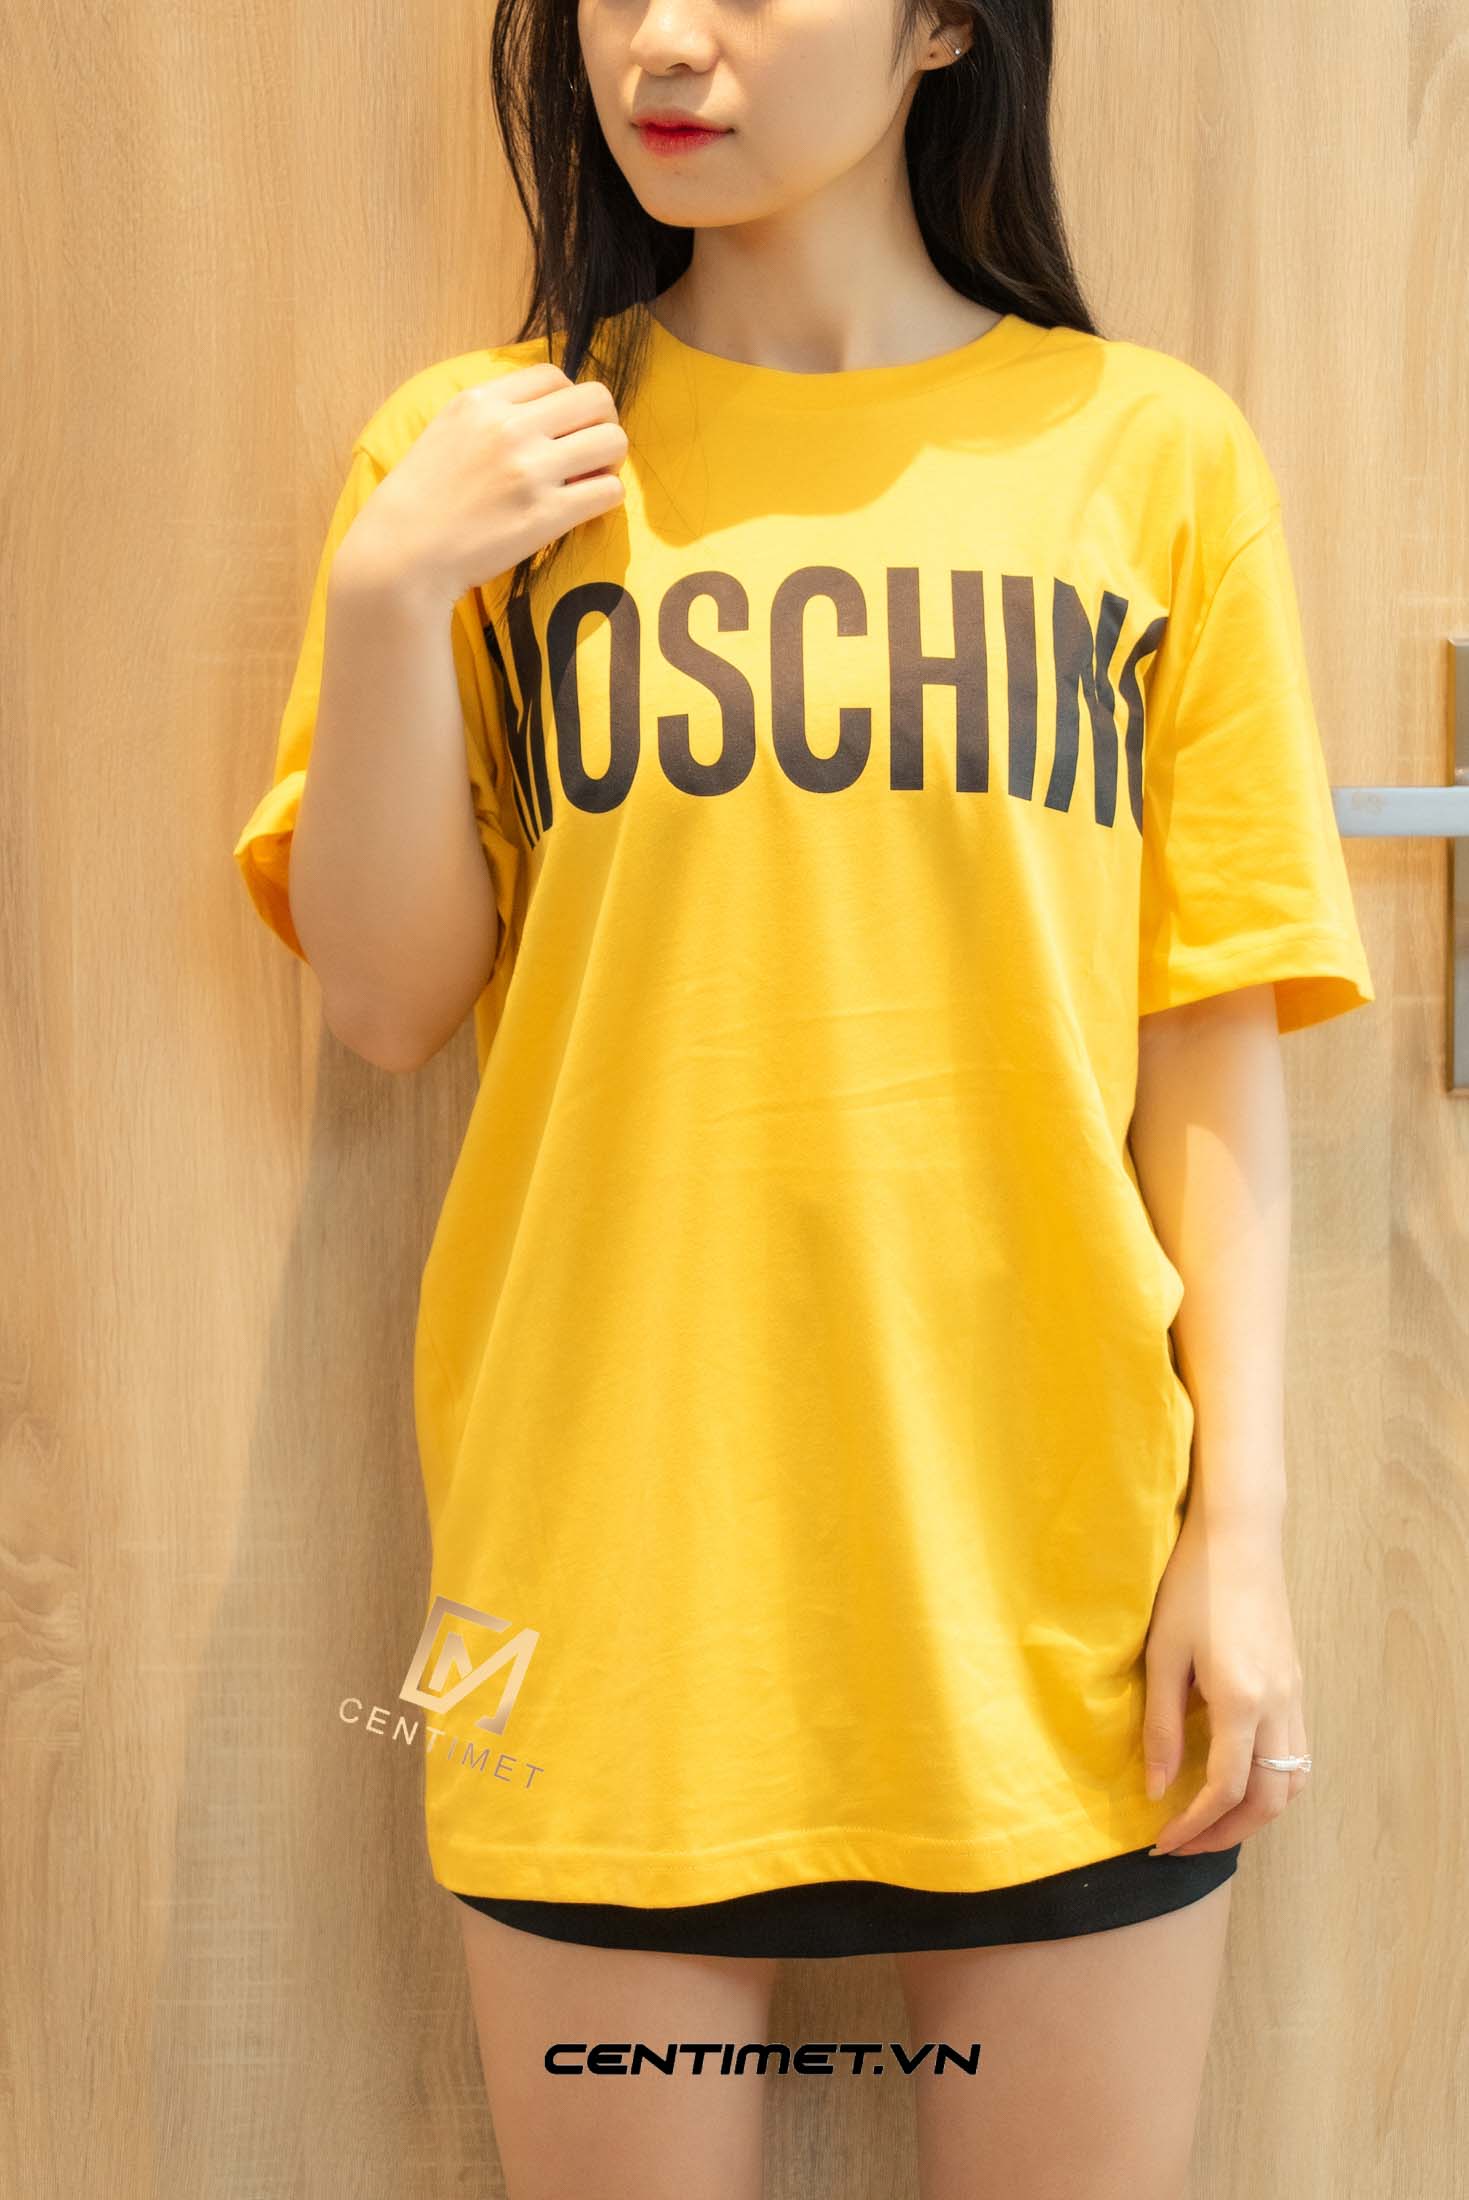 moschino-logo-t-shirt_16222328_31948487_2048